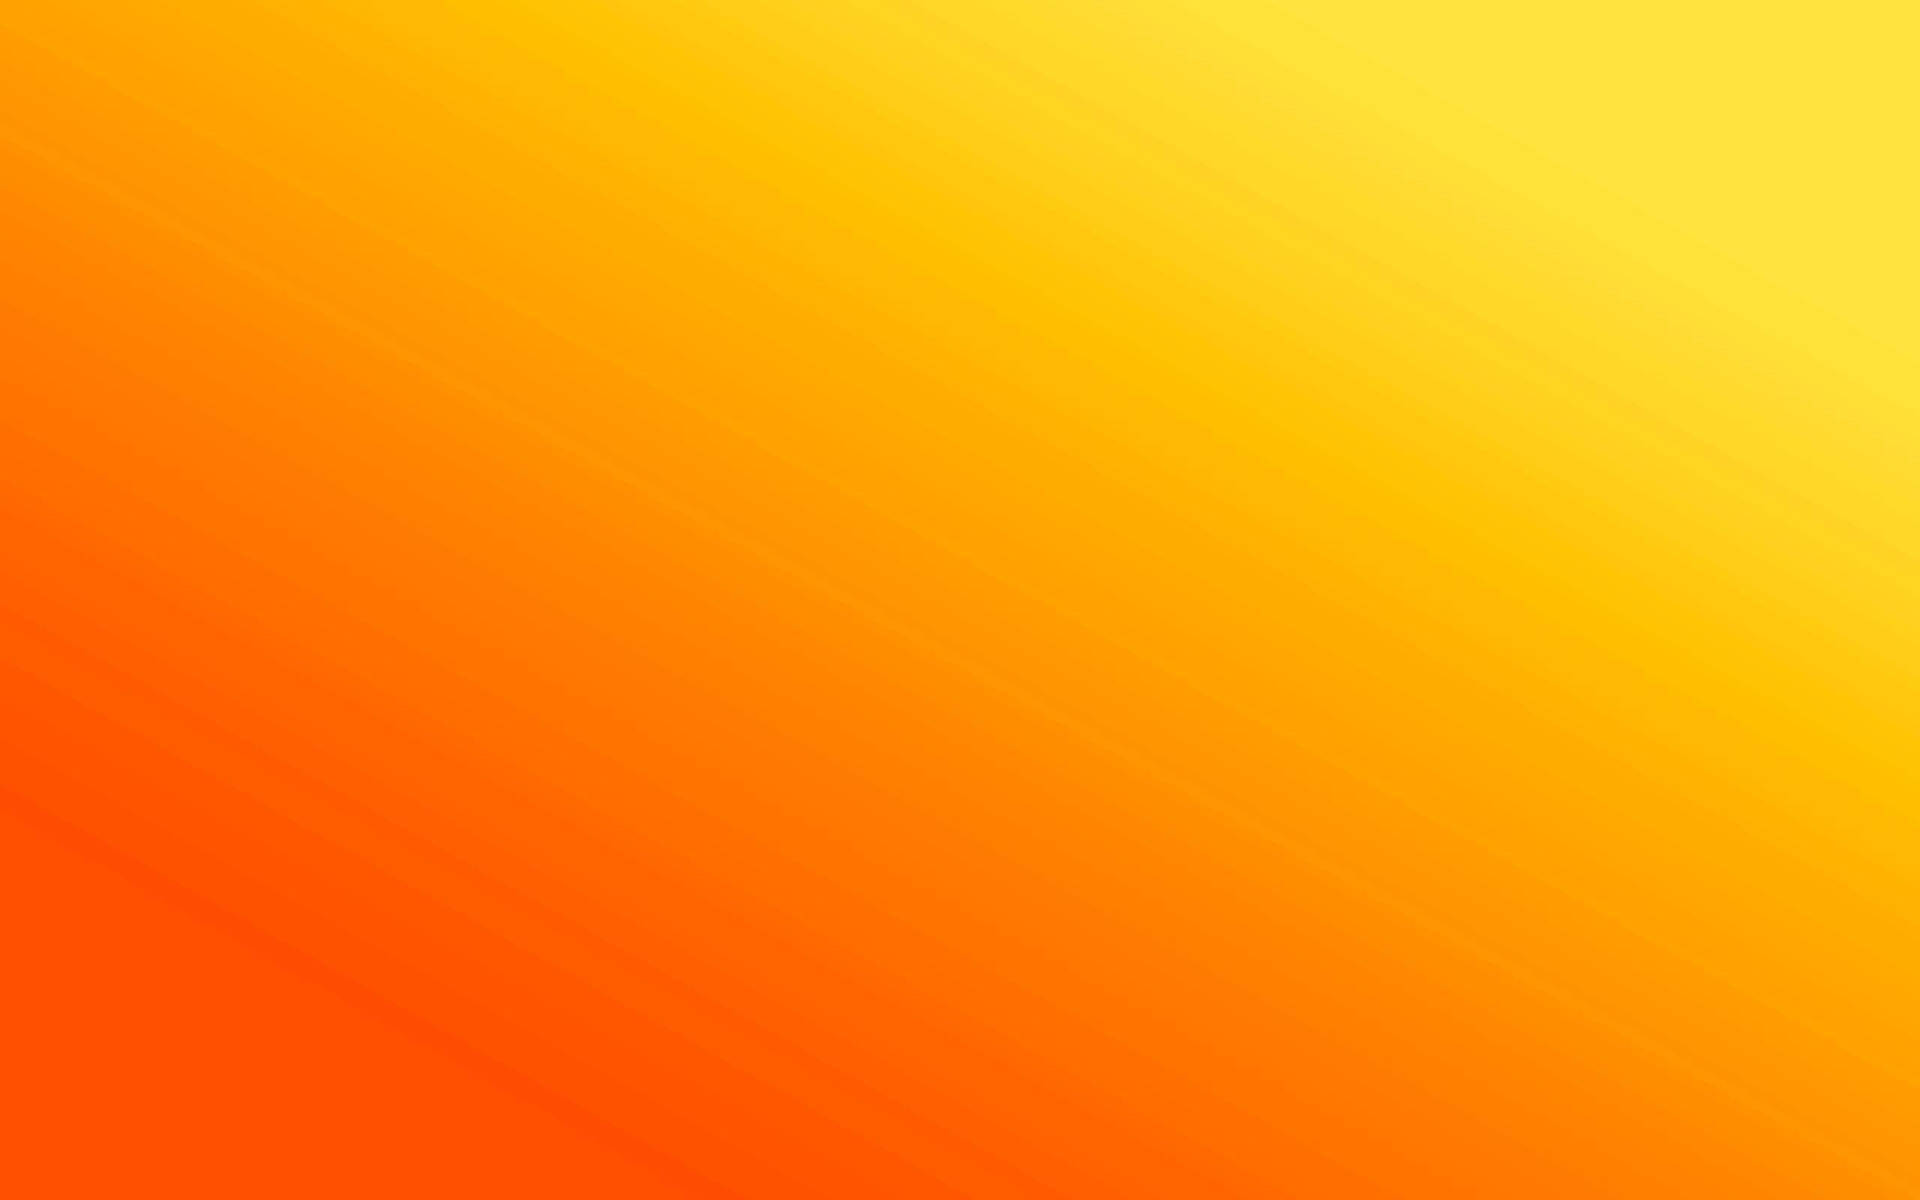 Plain Yellow And Orange Gradient Desktop Wallpaper